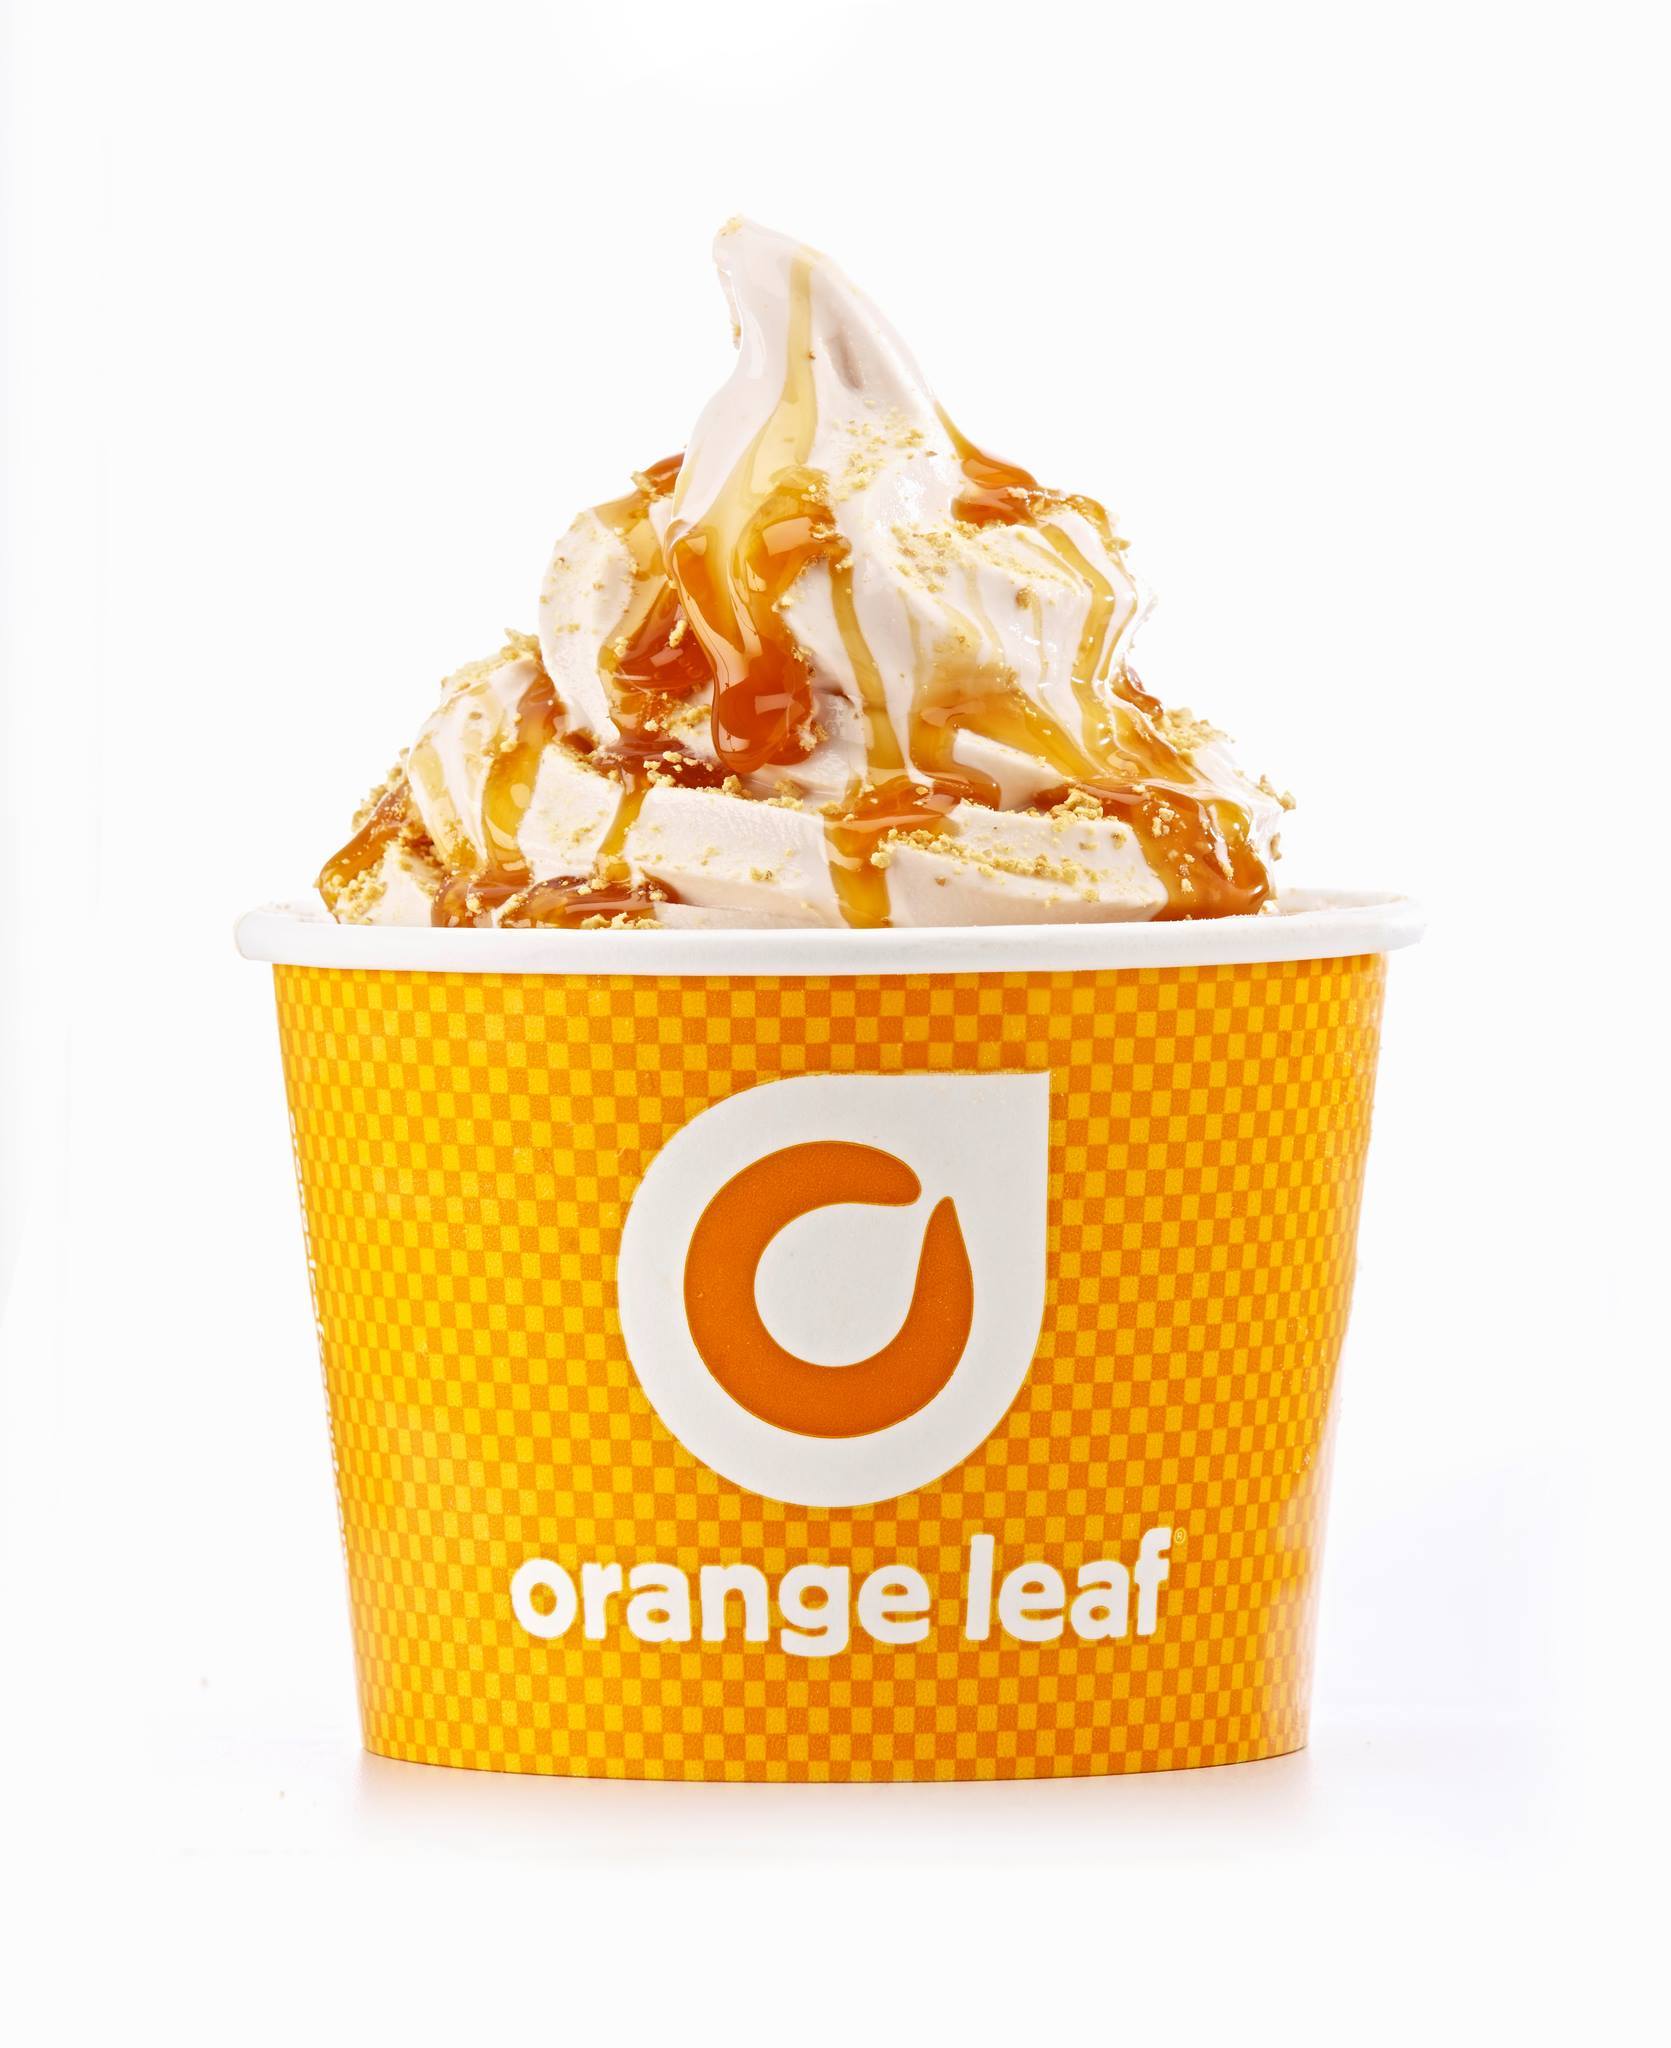 Orange Leaf Yogurt Logo - Orange Leaf Frozen Yogurt Indulges in New Salted Caramel Froyo